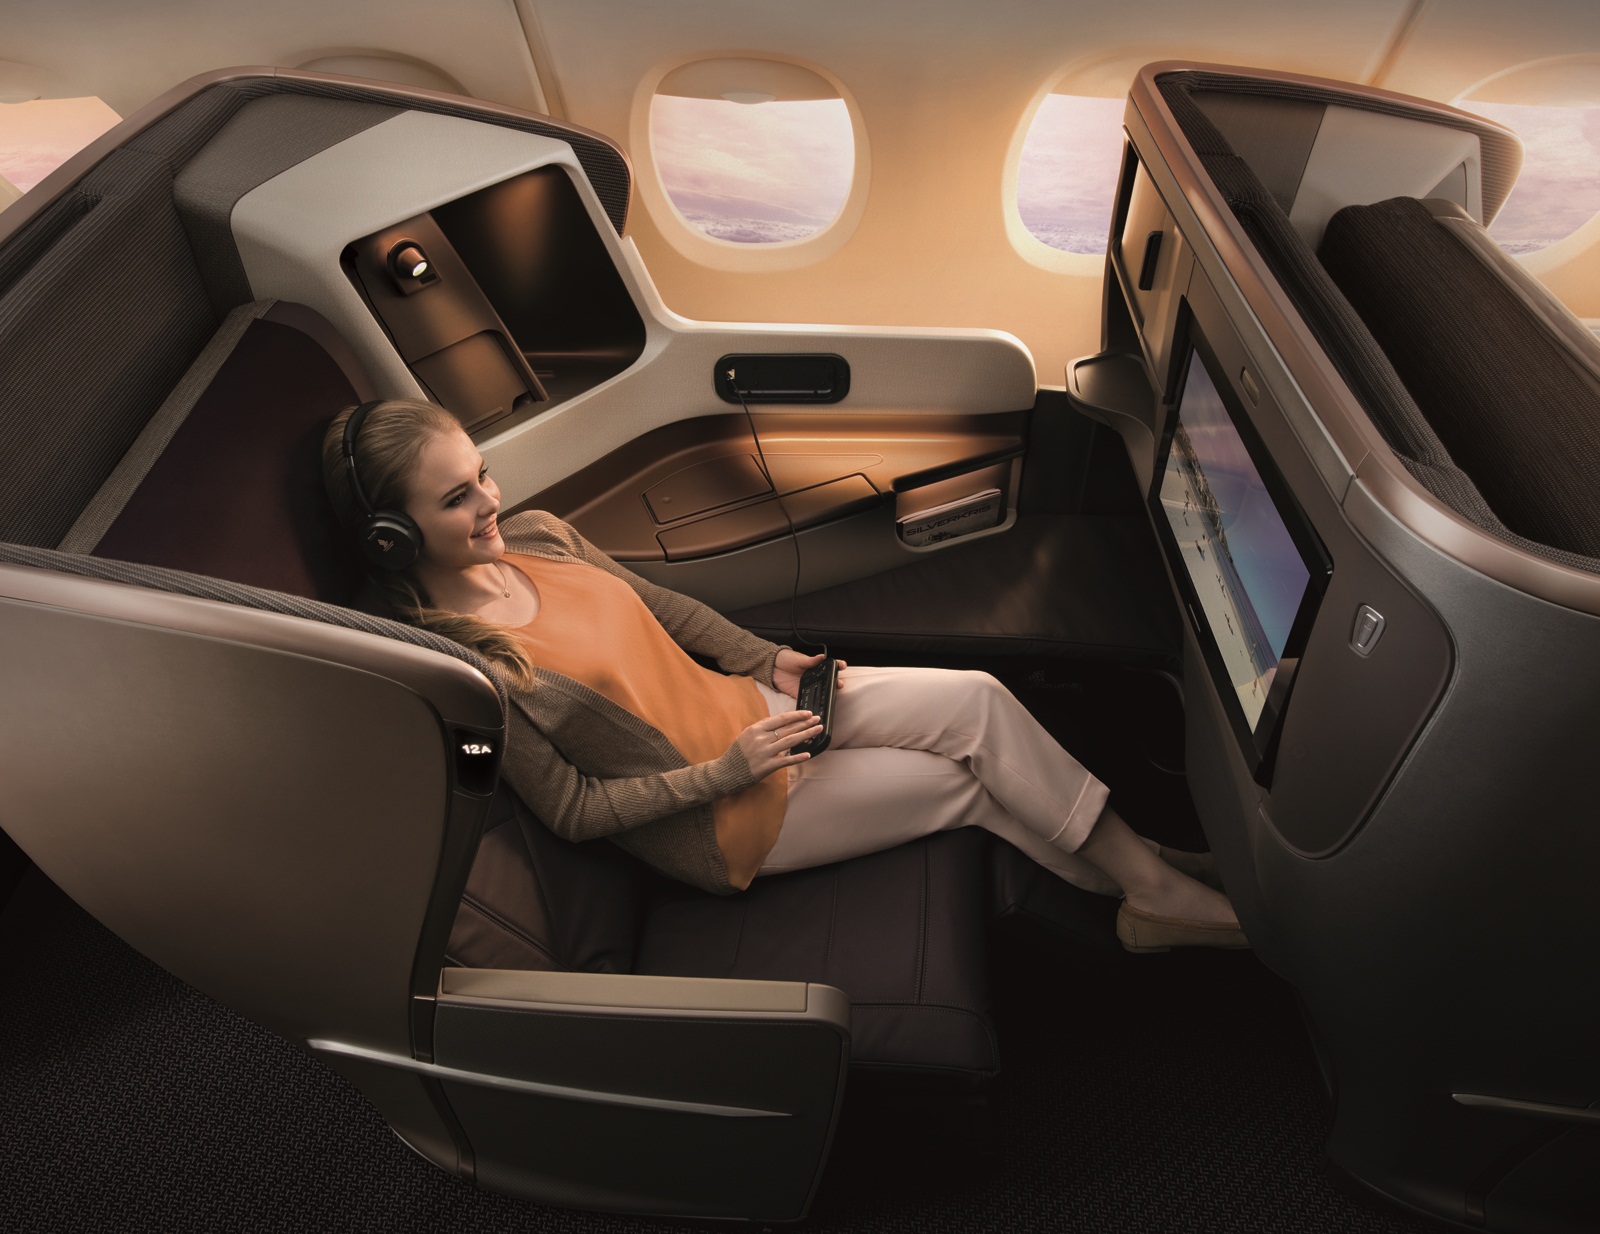 Singapore Airlines, New York Hattında “All-Premium” Uçacak